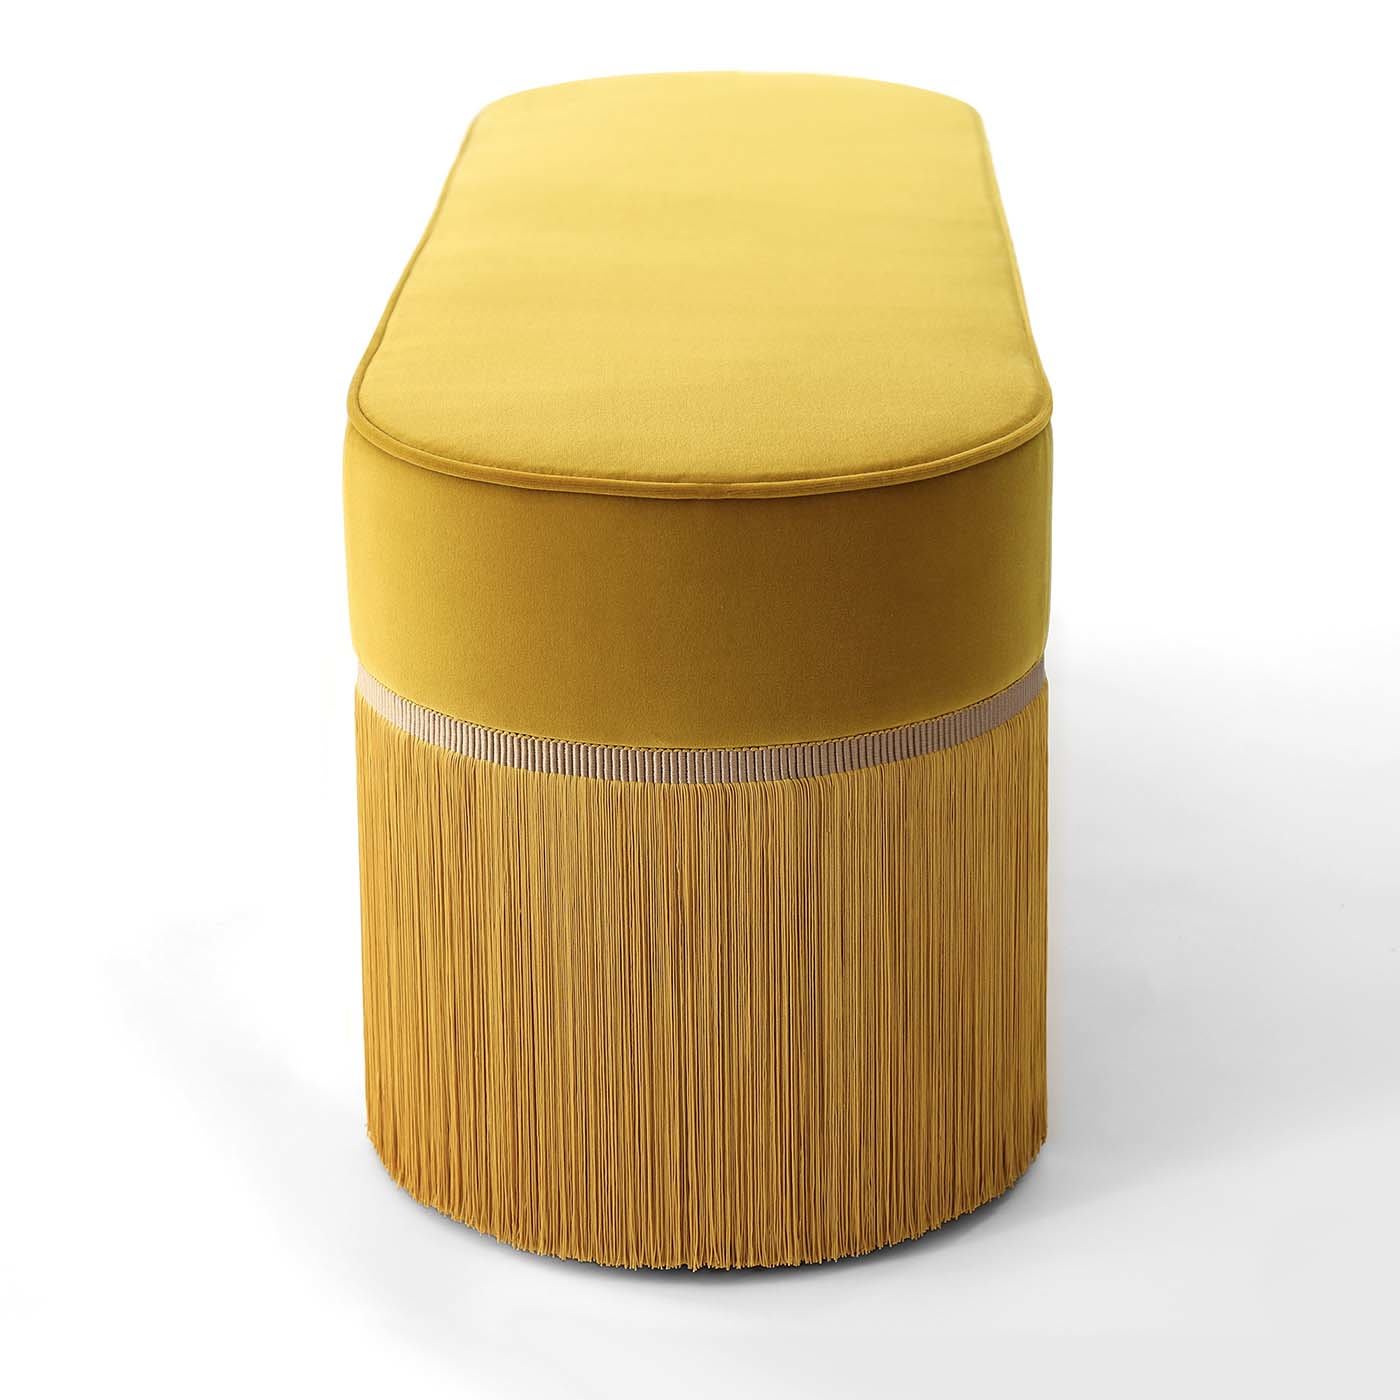 Couture Yellow Bench - Lorenza Bozzoli Design